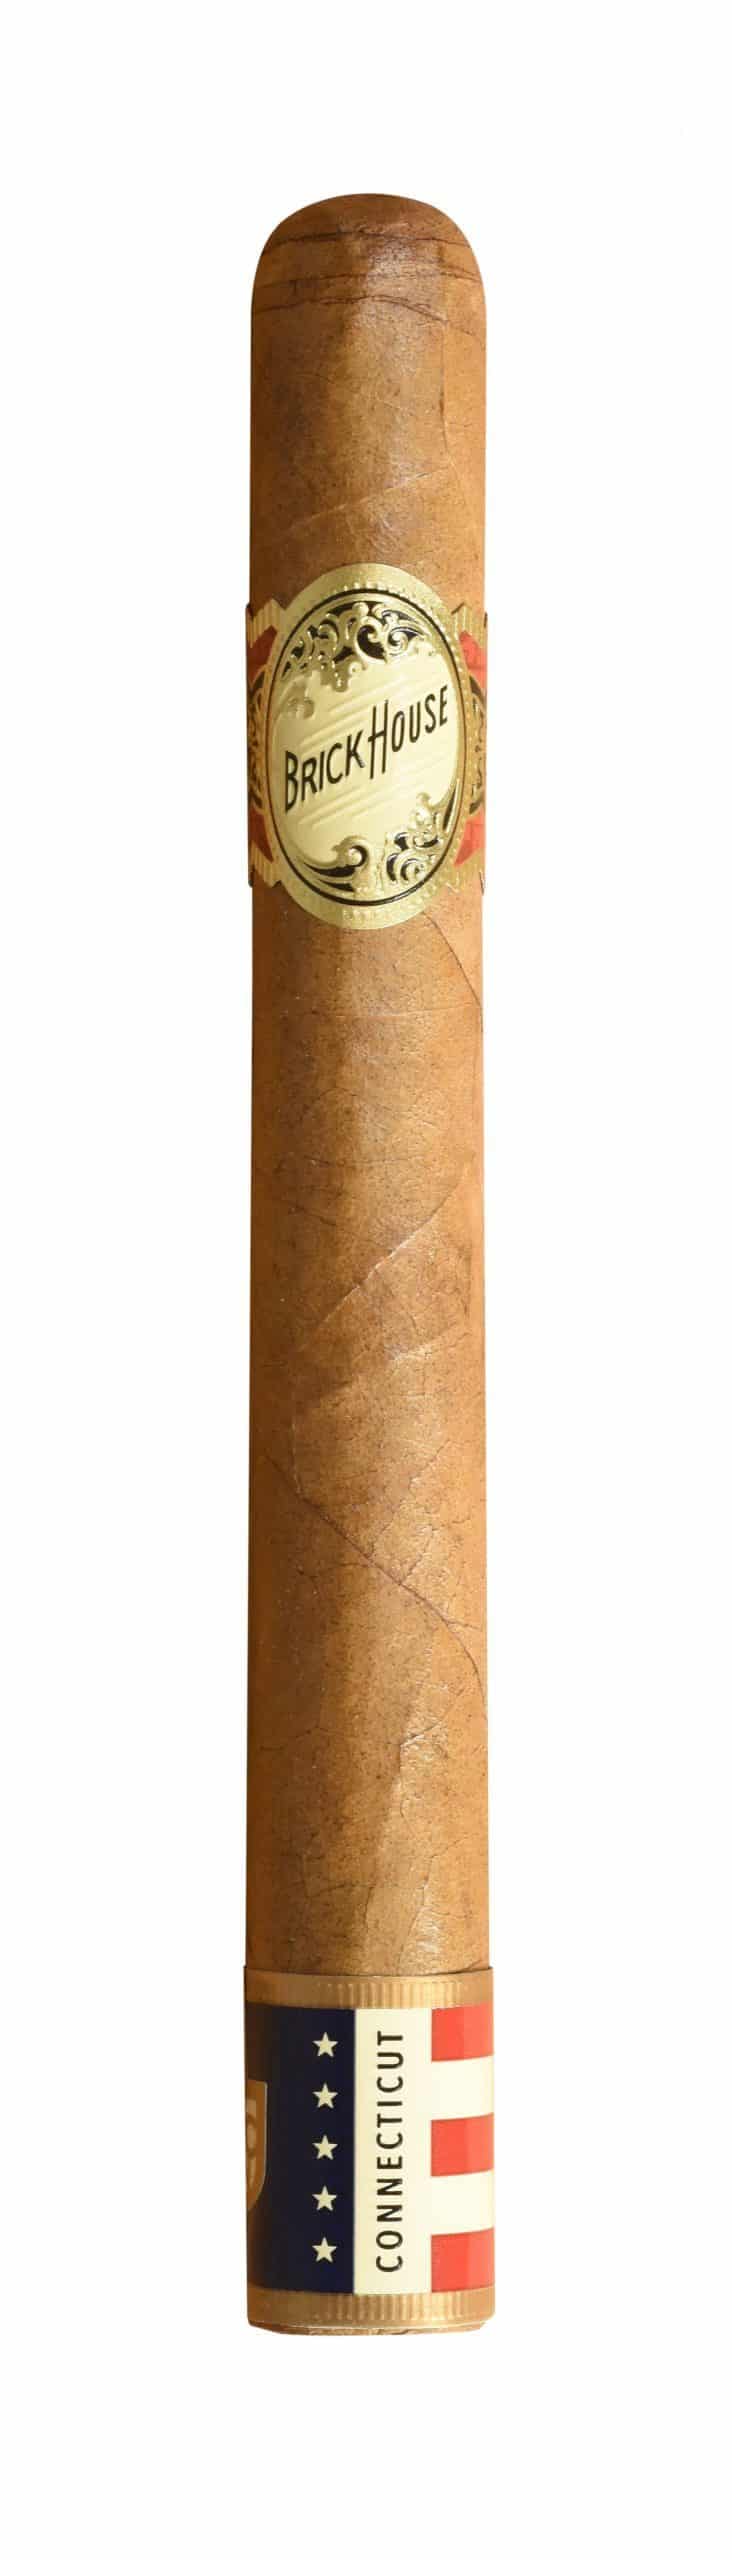 brick house double connecticut corona larga single cigar